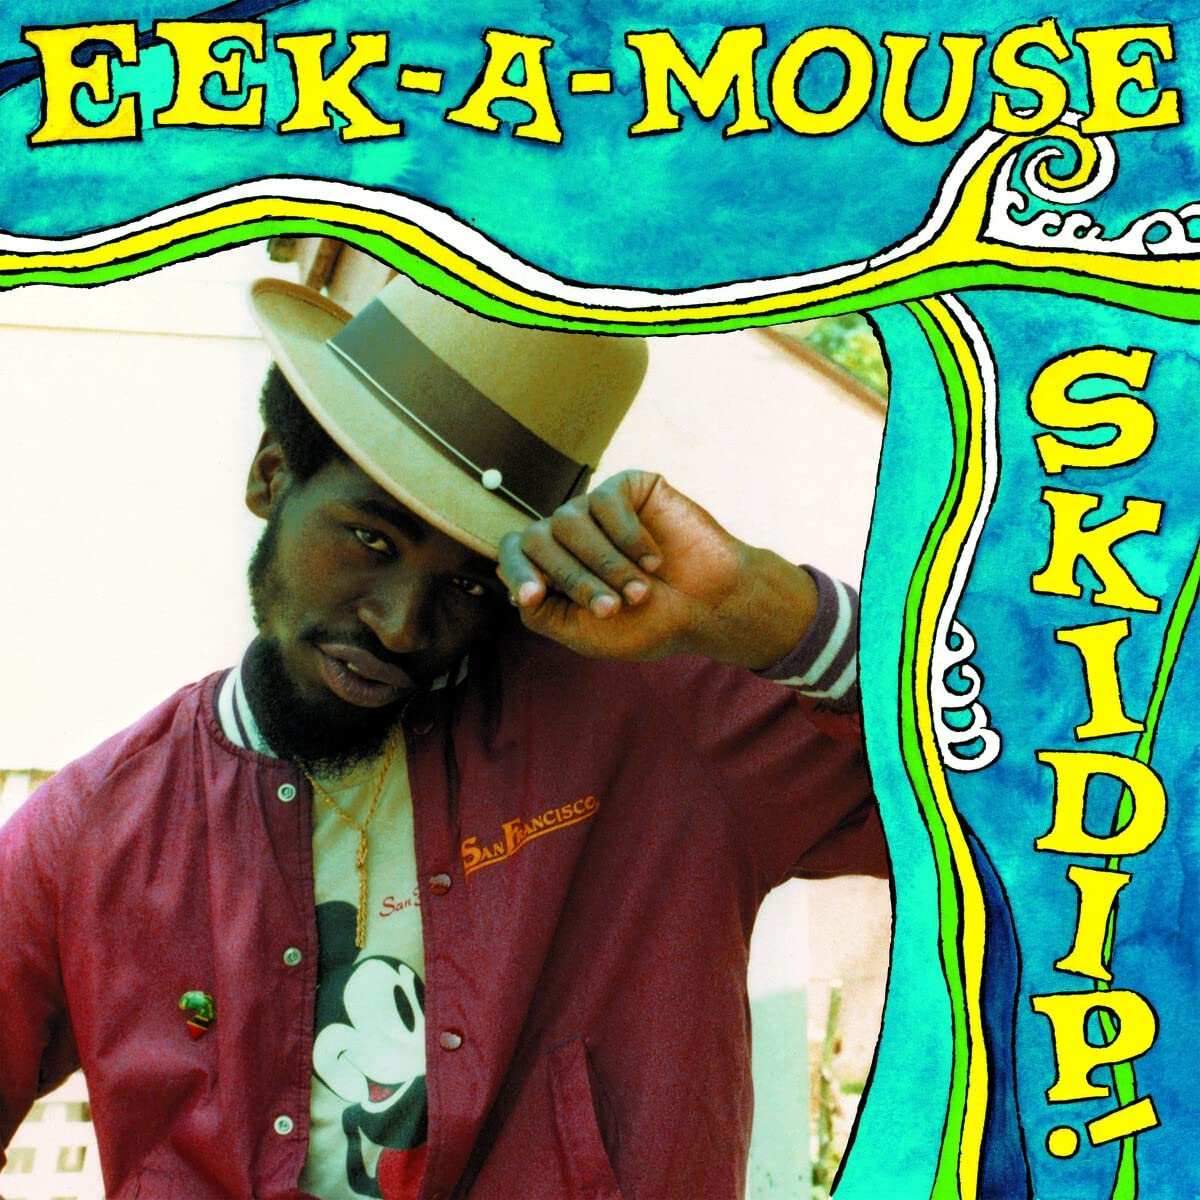 EEK-A-MOUSE - SKIDIP! Vinyl LP